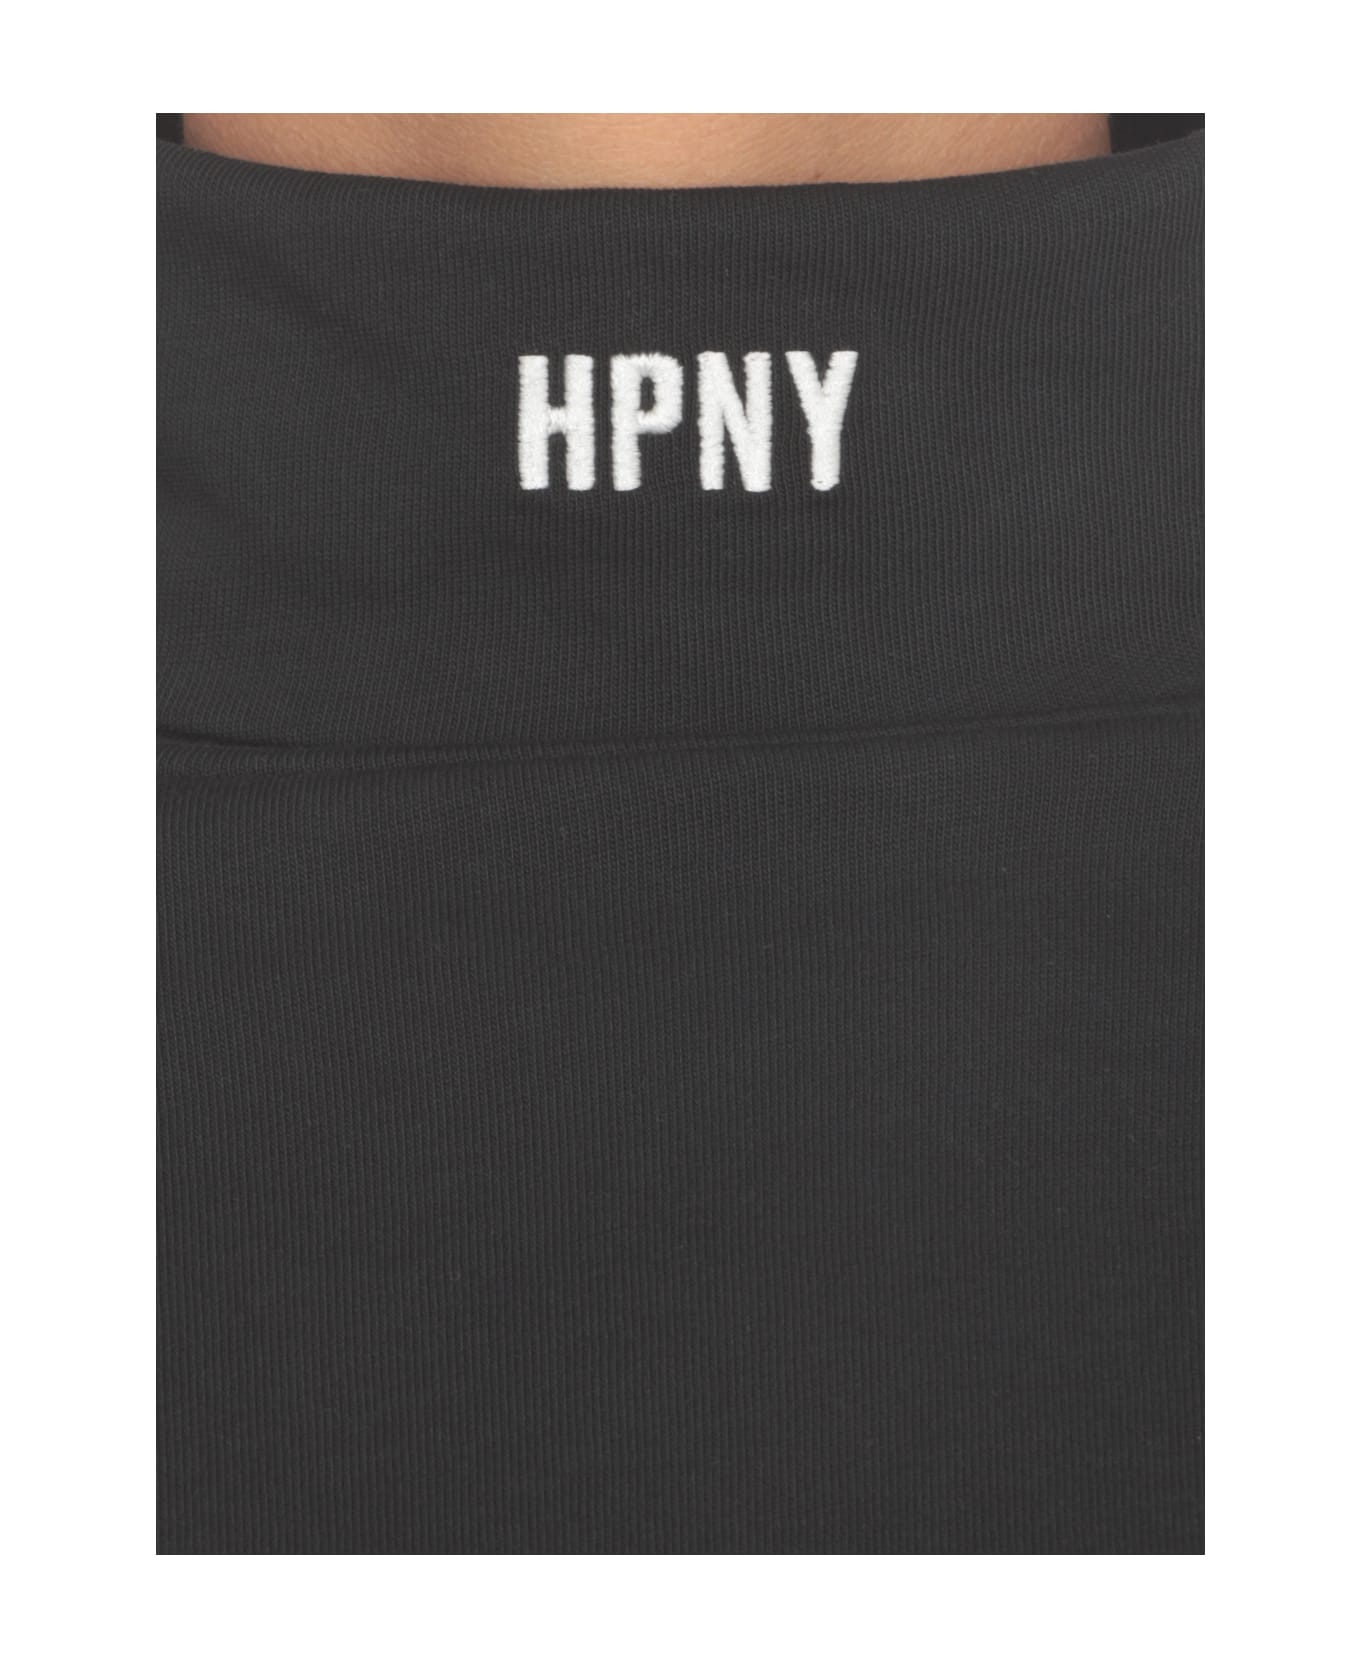 HERON PRESTON Sweater With Logo Hpny - Black